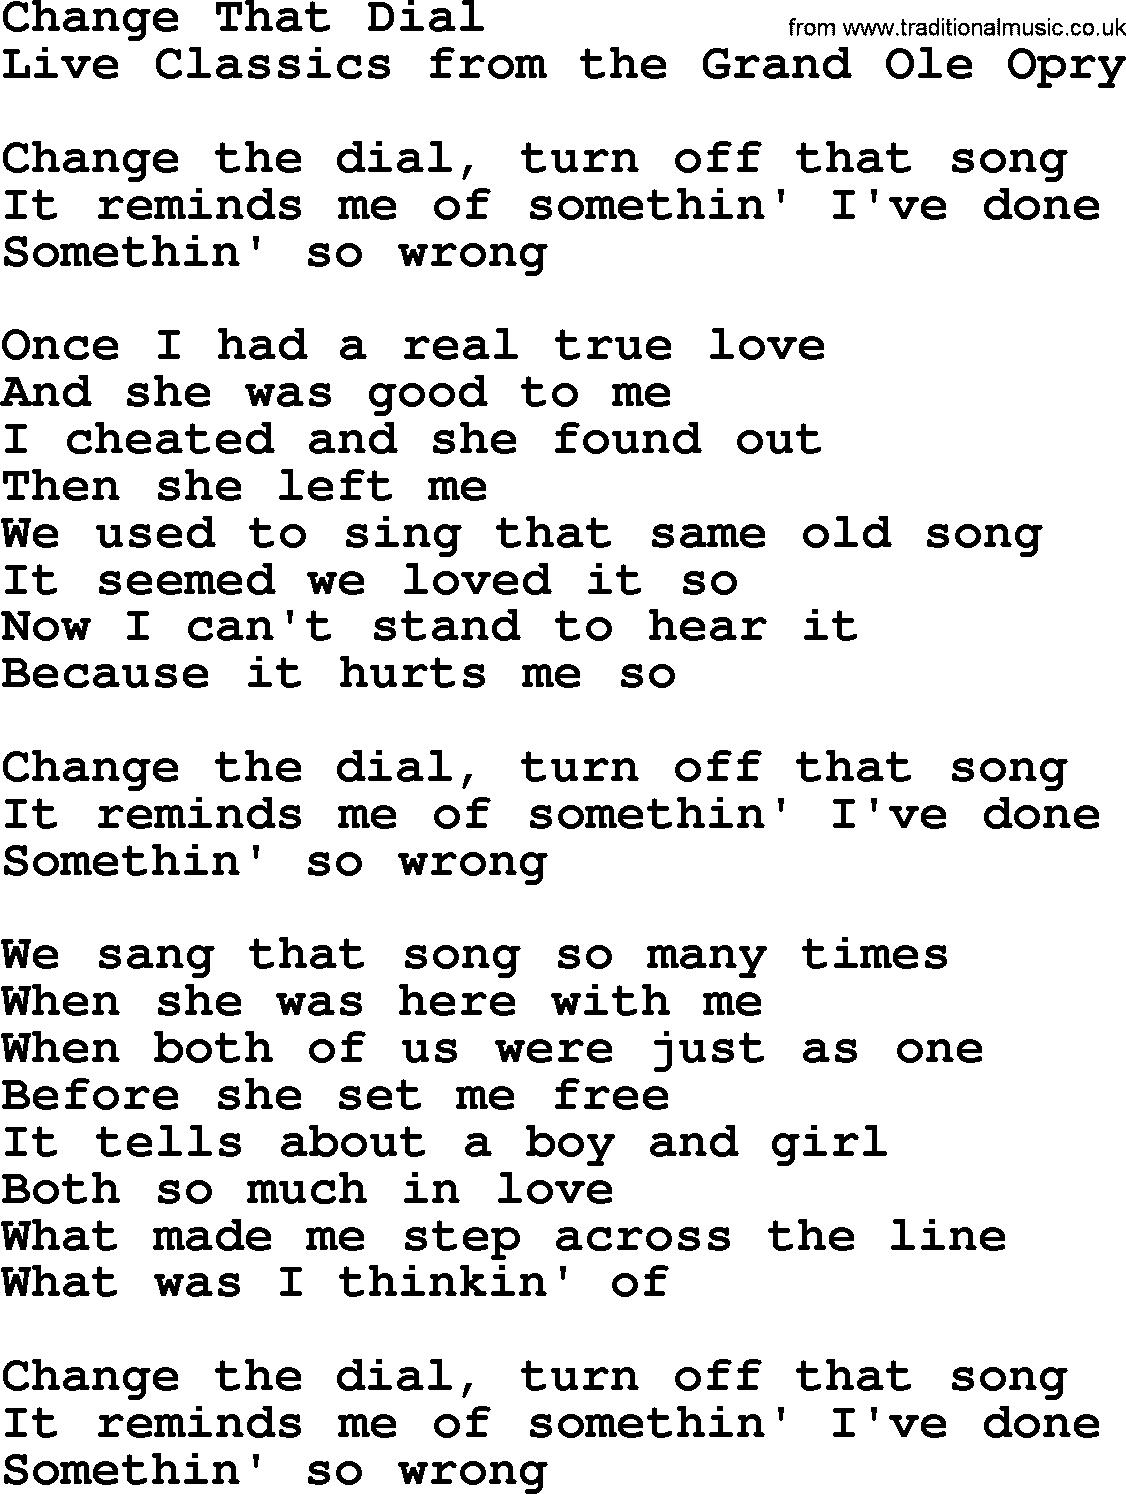 Marty Robbins song: Change That Dial, lyrics